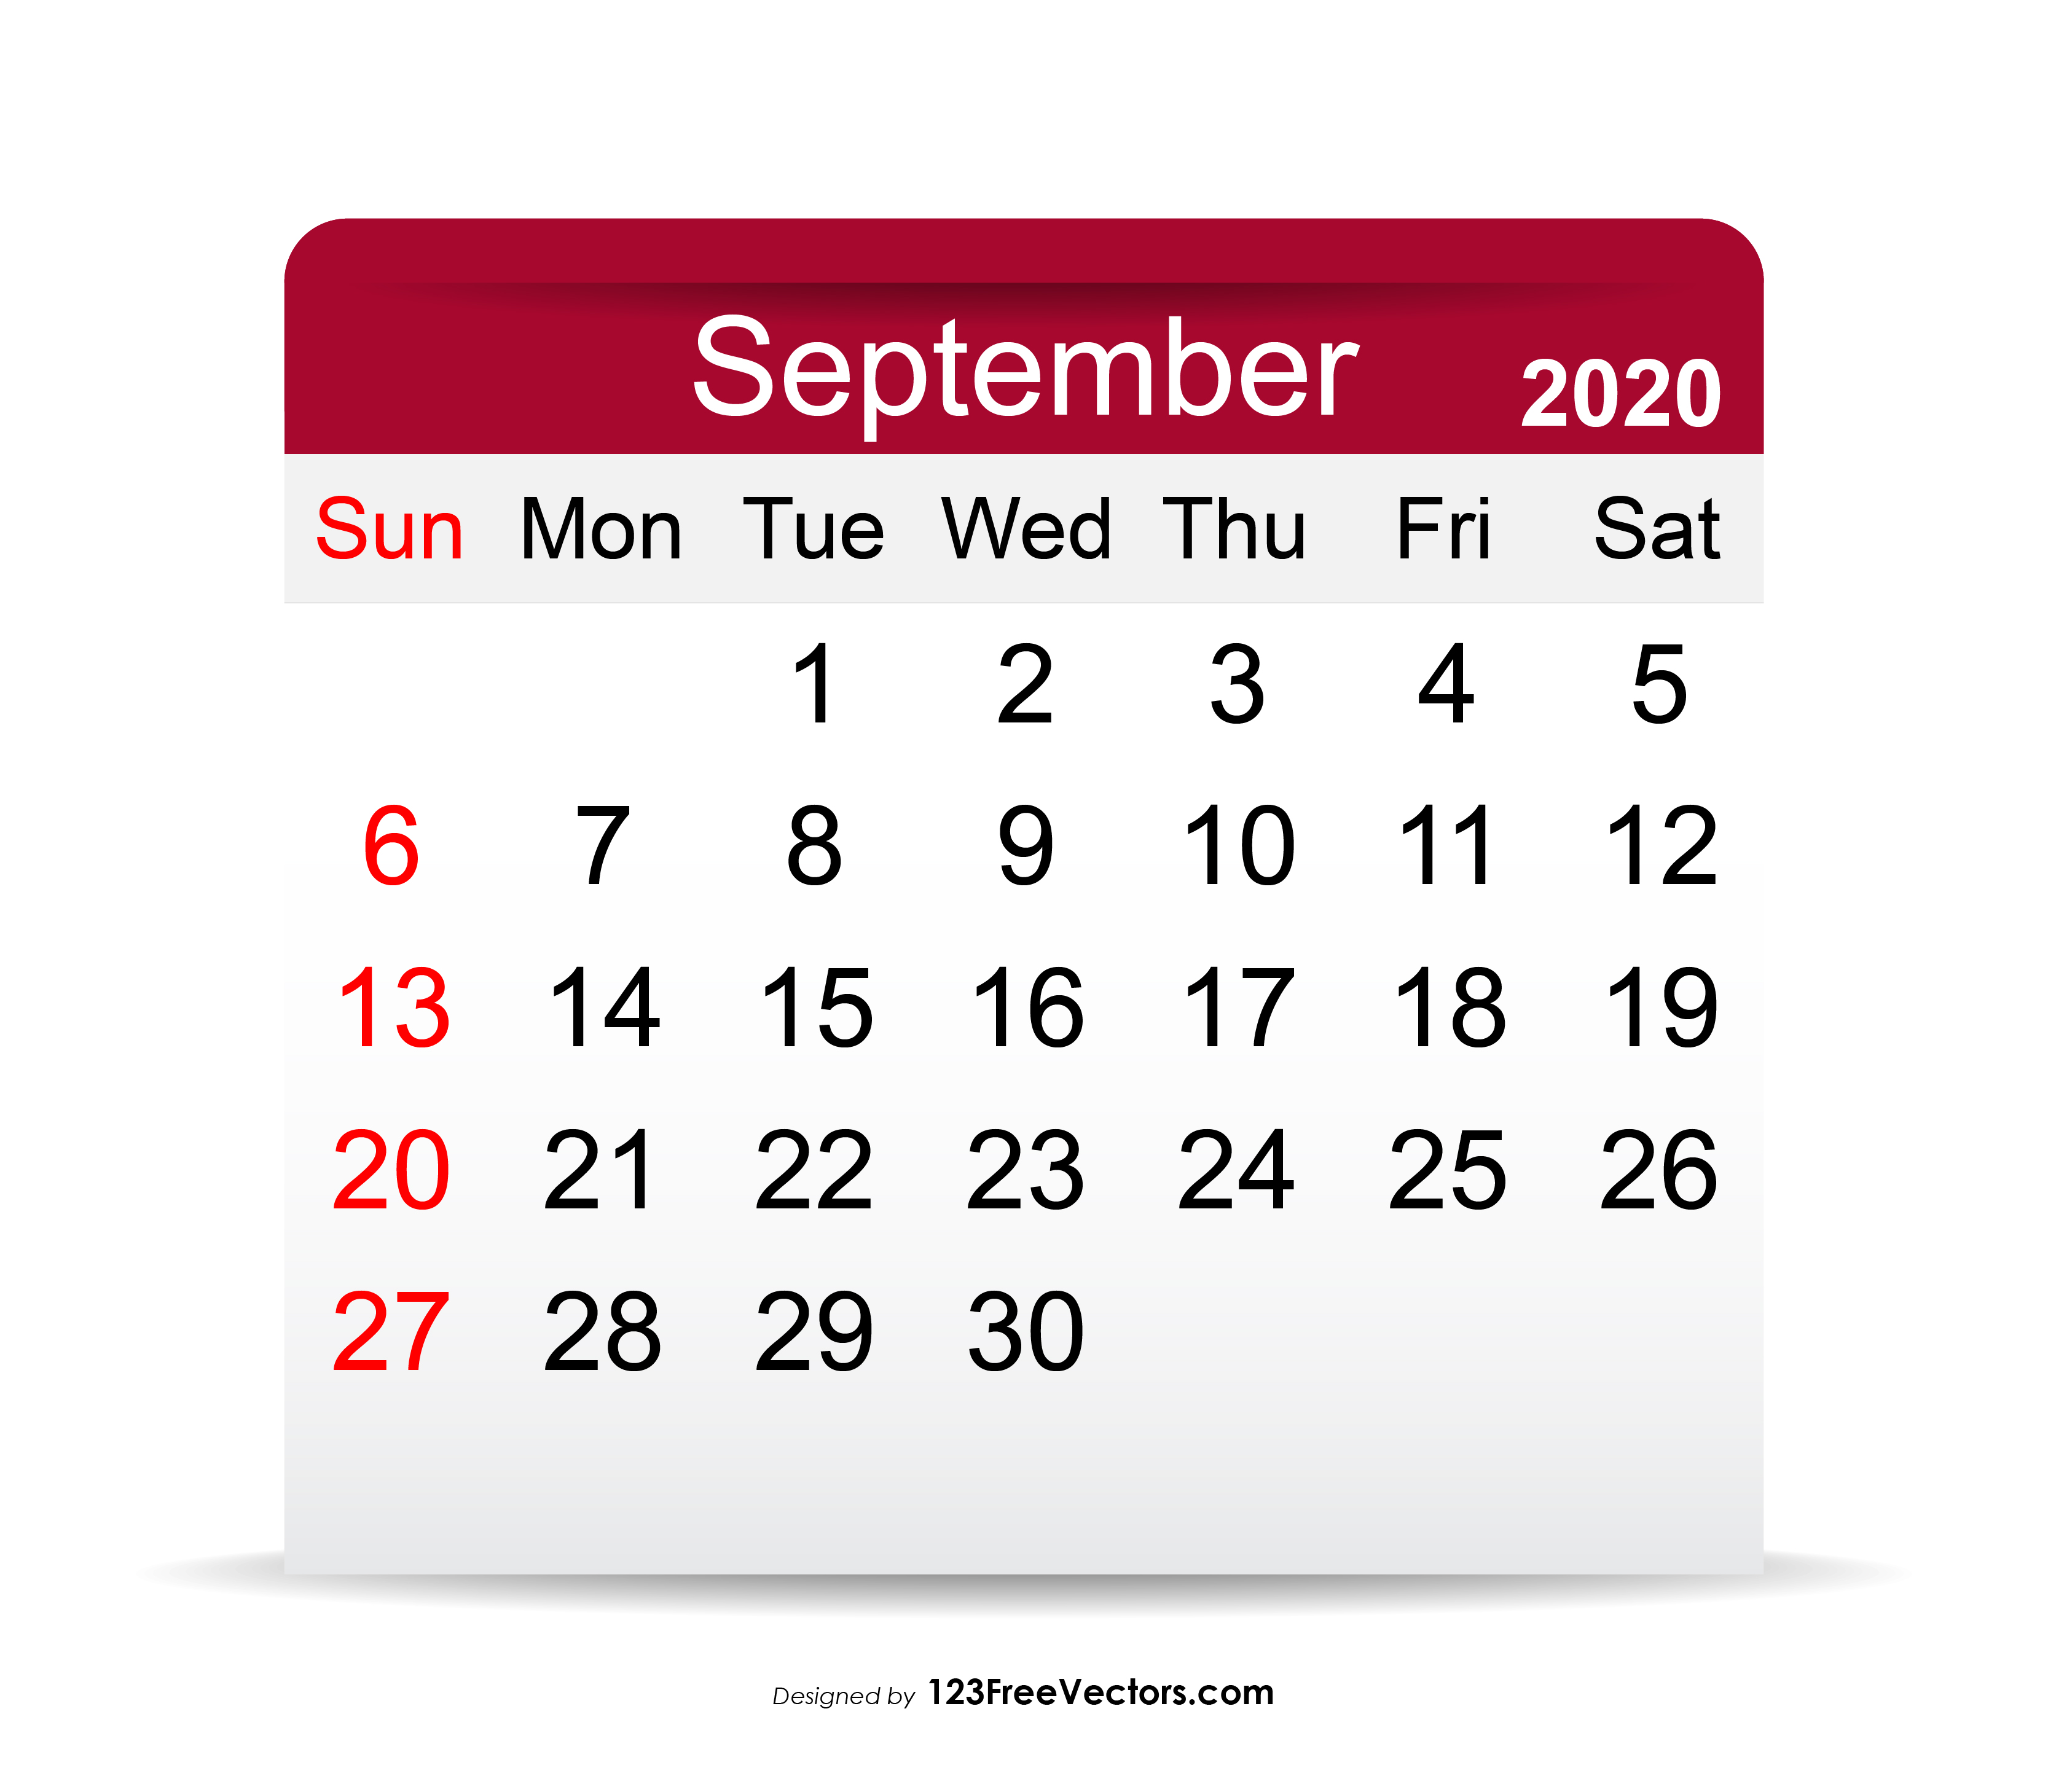 Free September 2020 Calendar